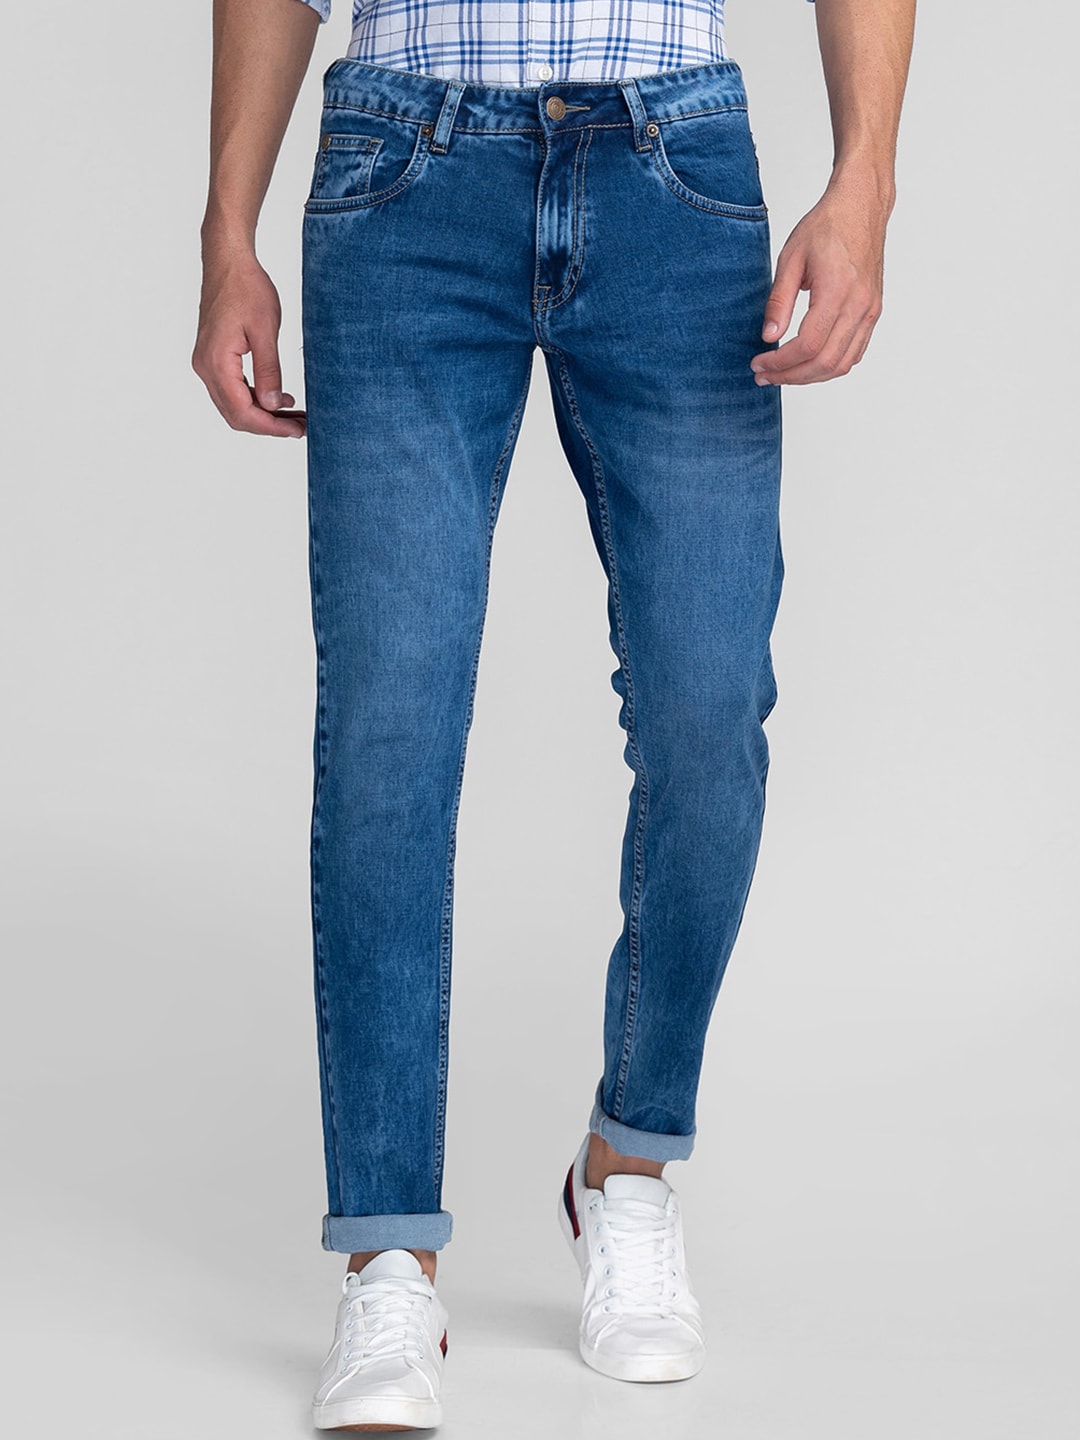 GIORDANO Men Classic Slim Fit Light Fade Cotton Jeans